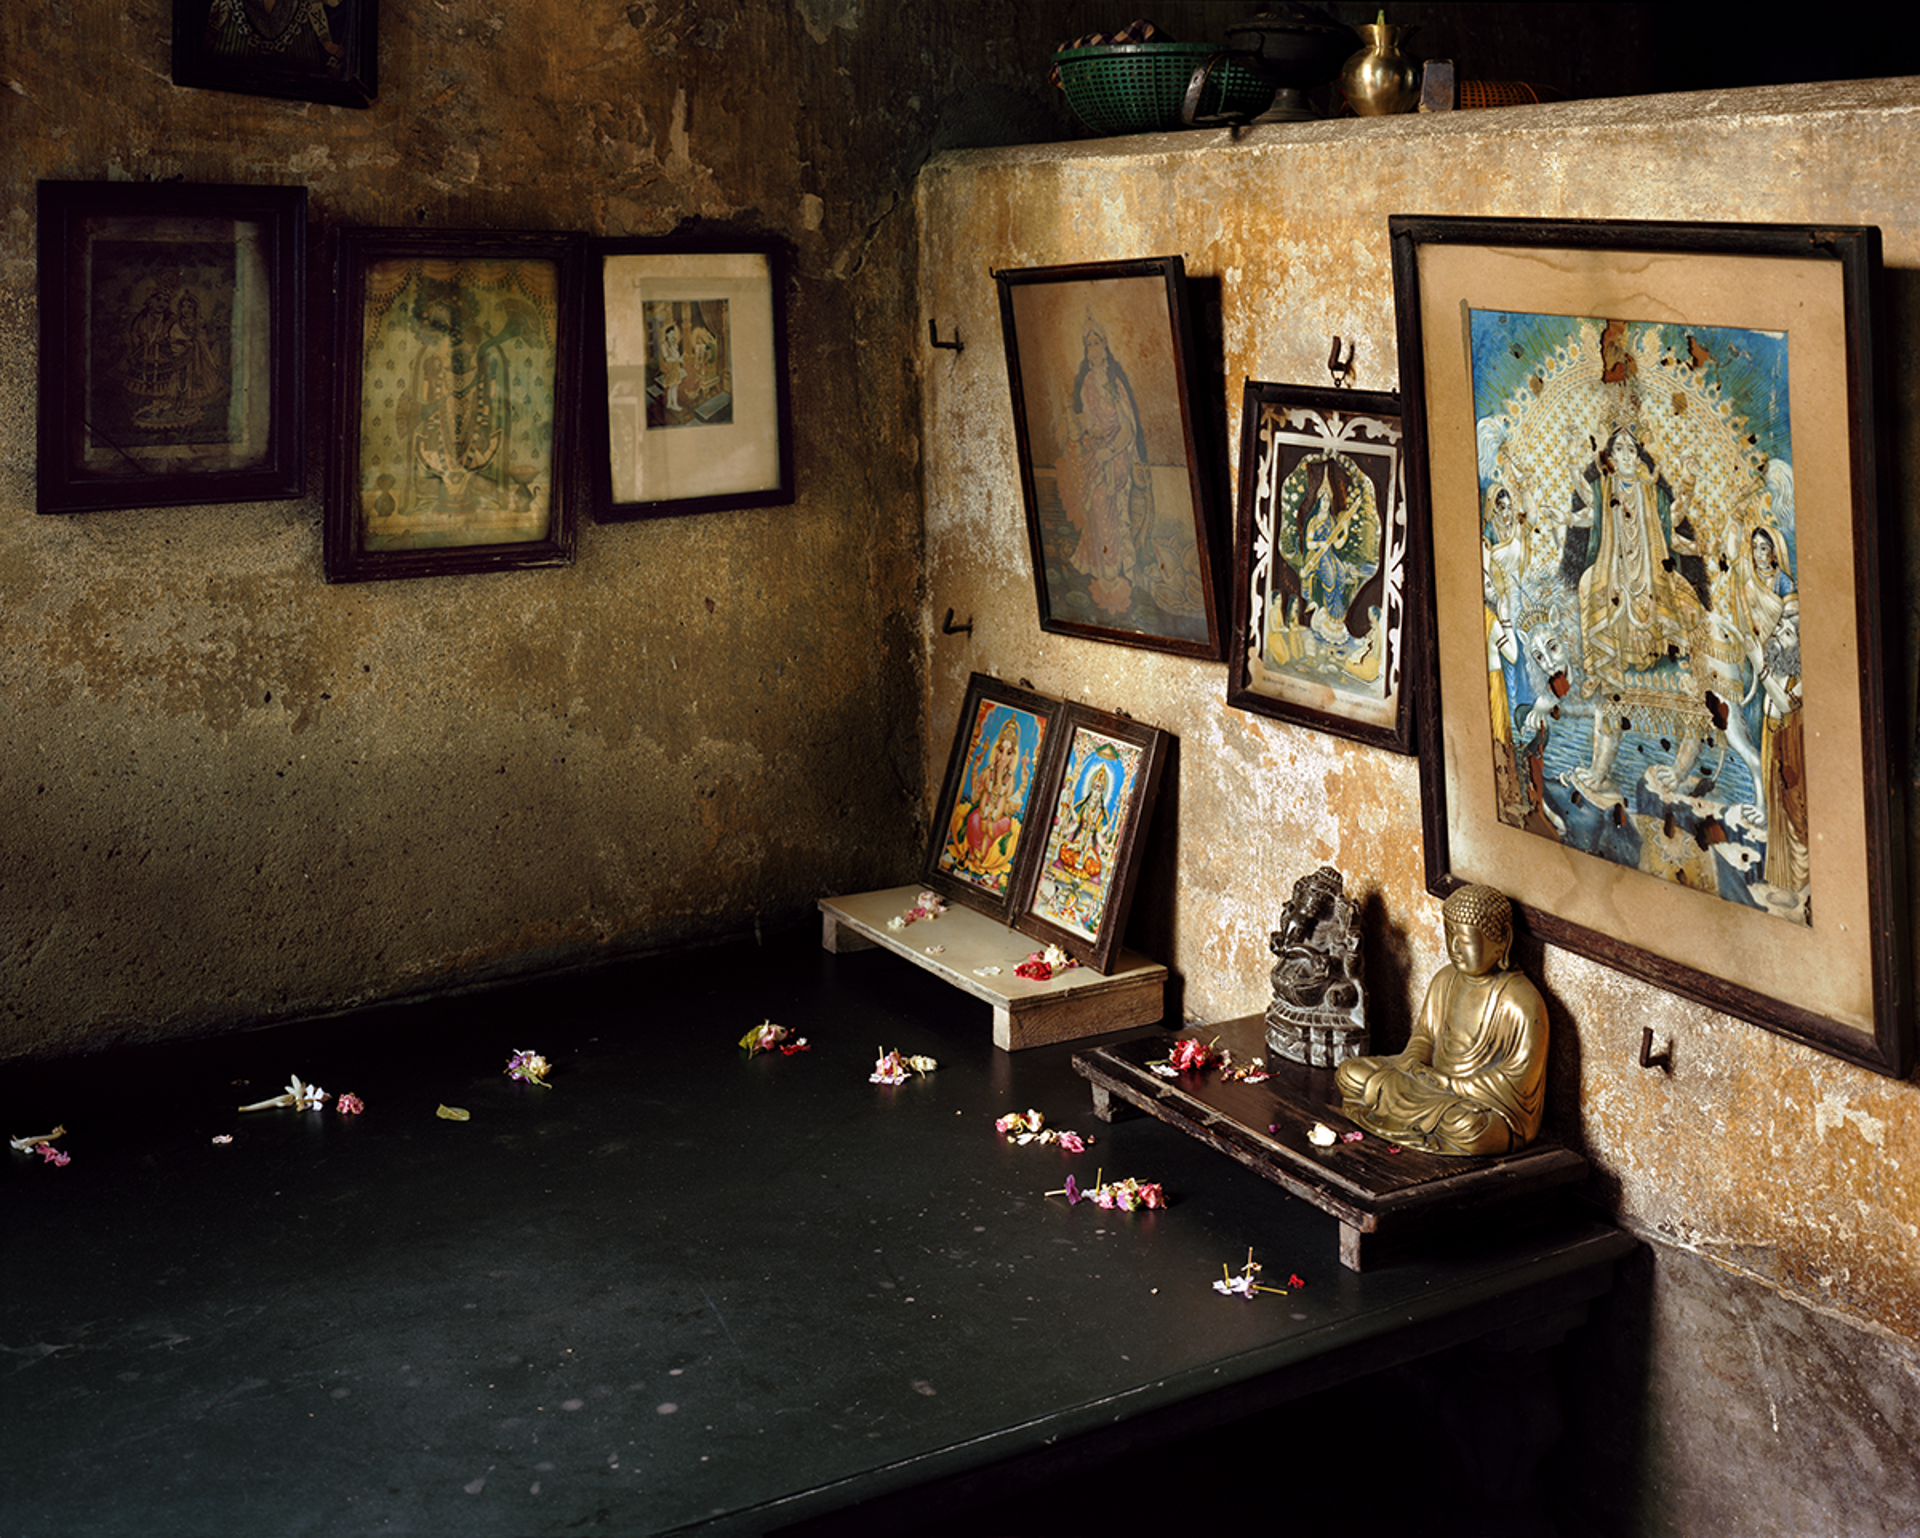 Puja Room in the Women's Courtyard, Monmotho Ghosh House, North Kolkata by Laura McPhee